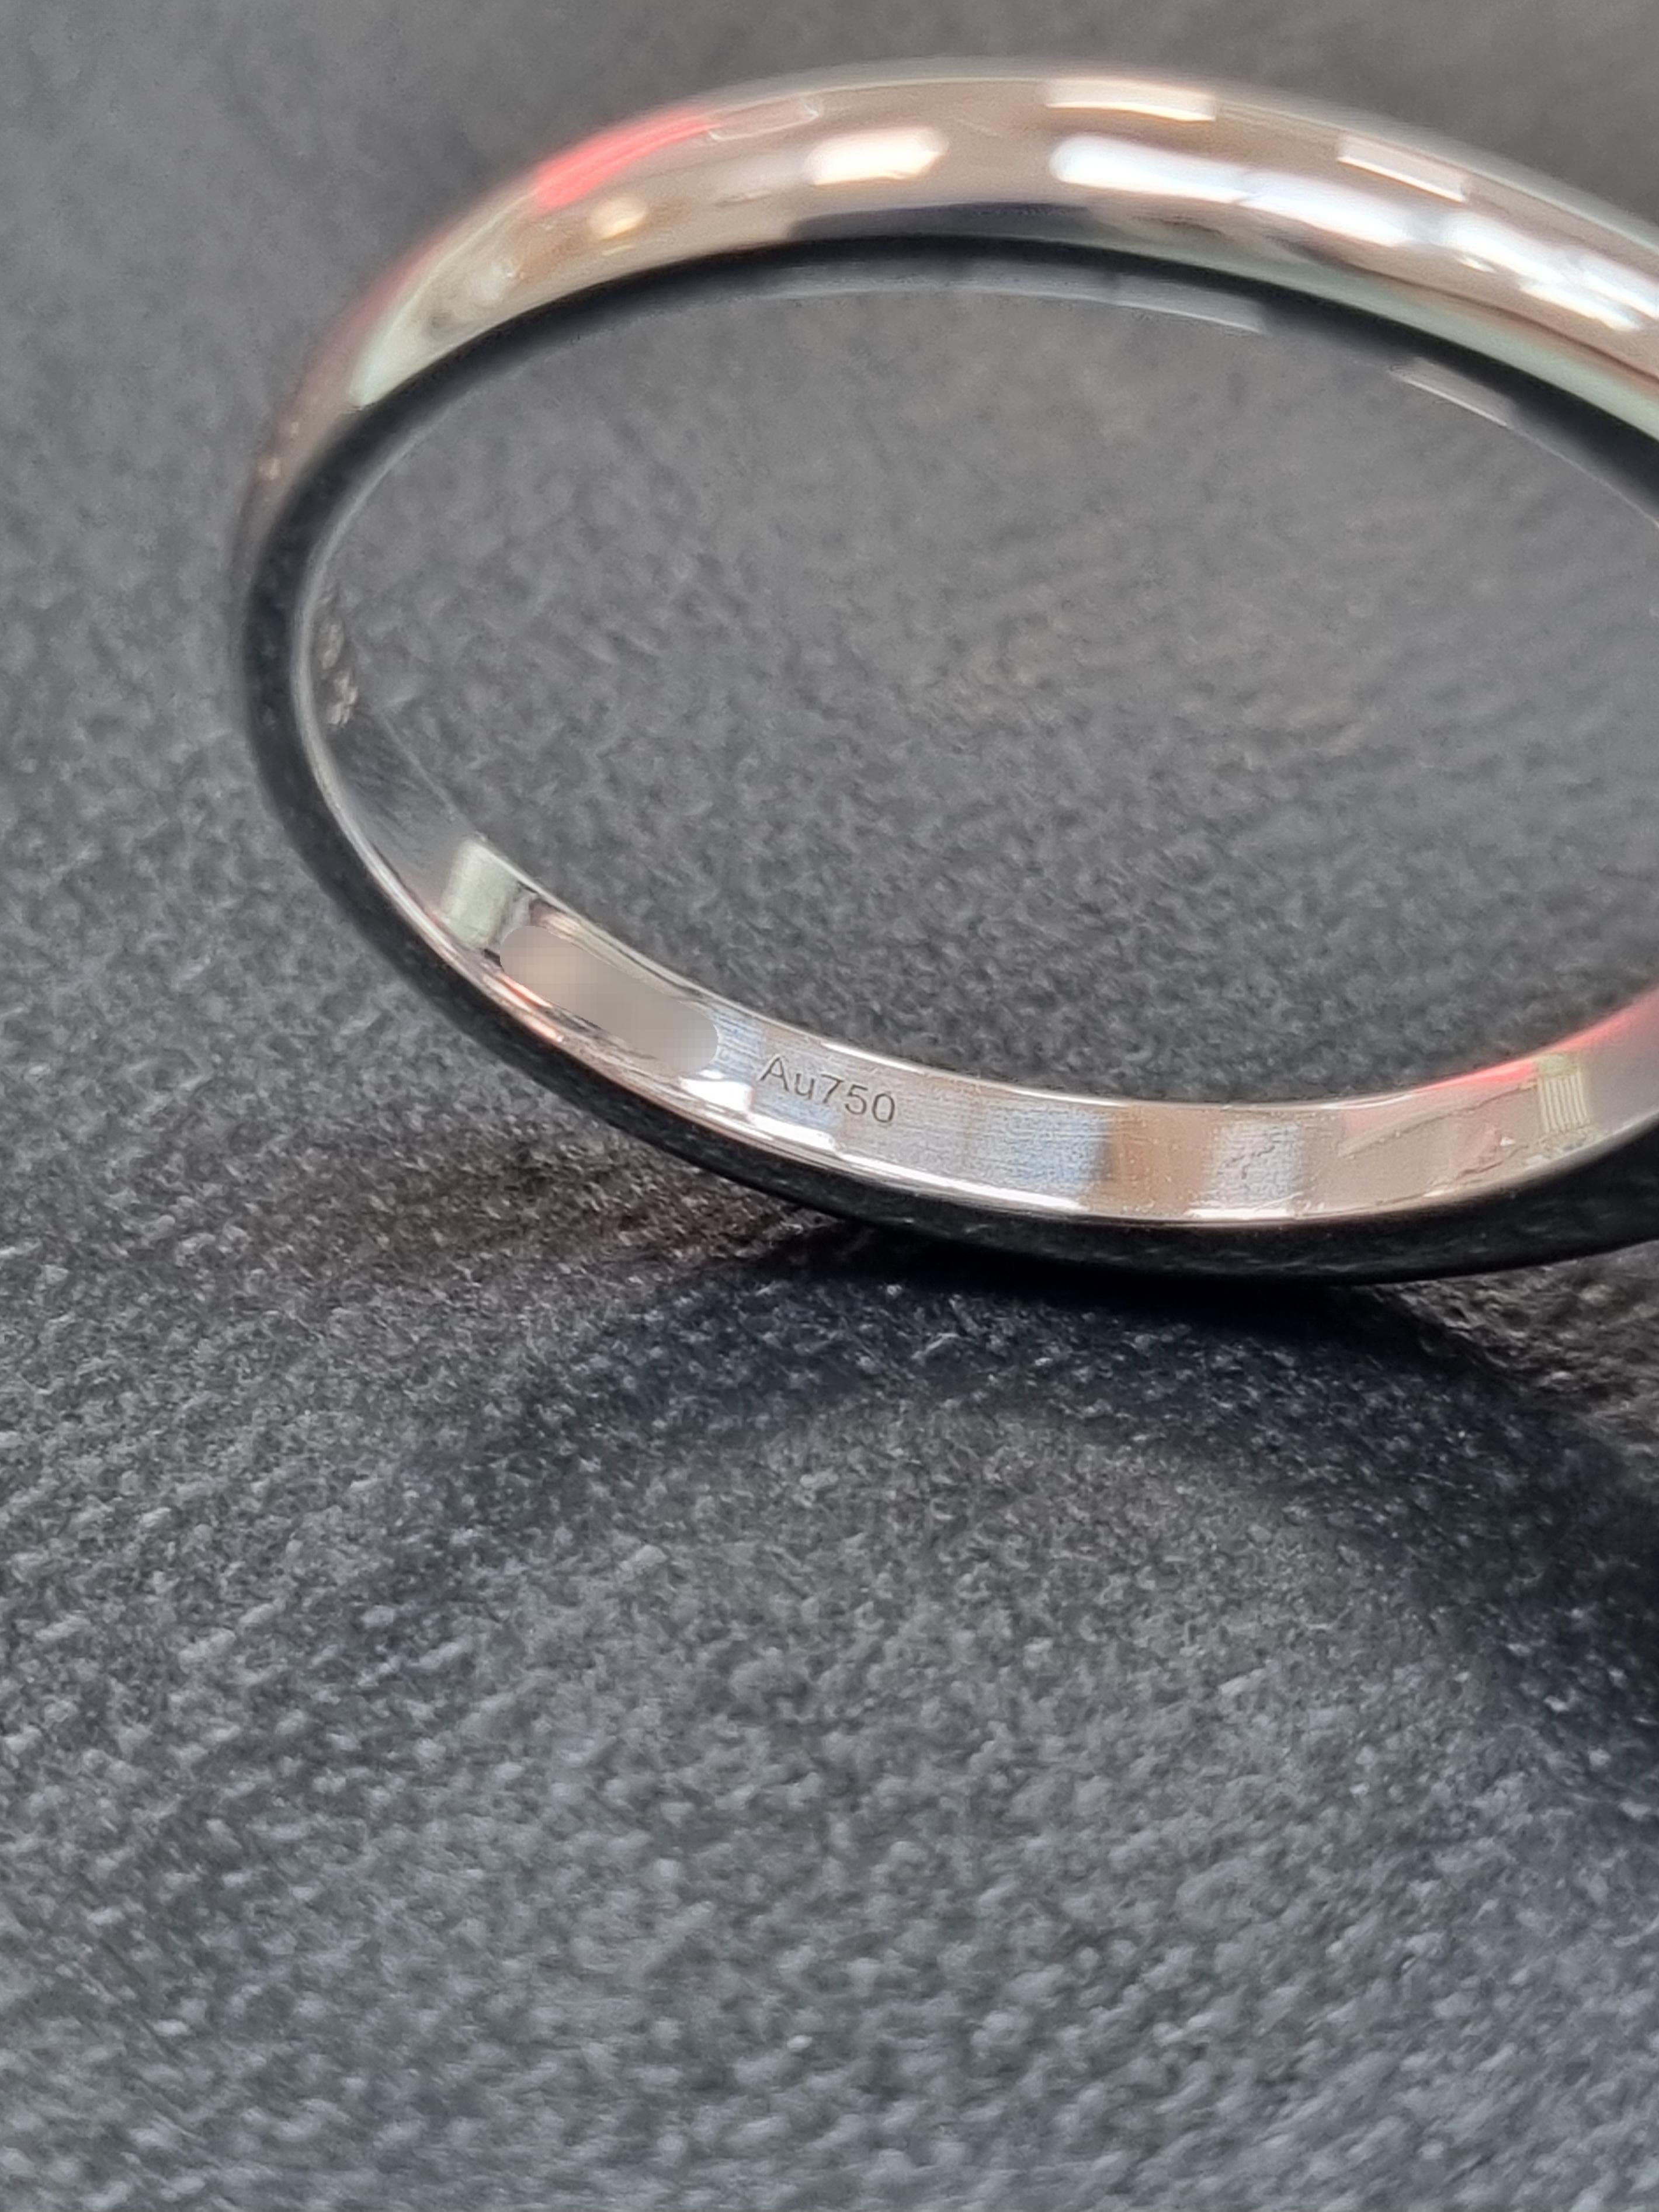 graff sapphire ring